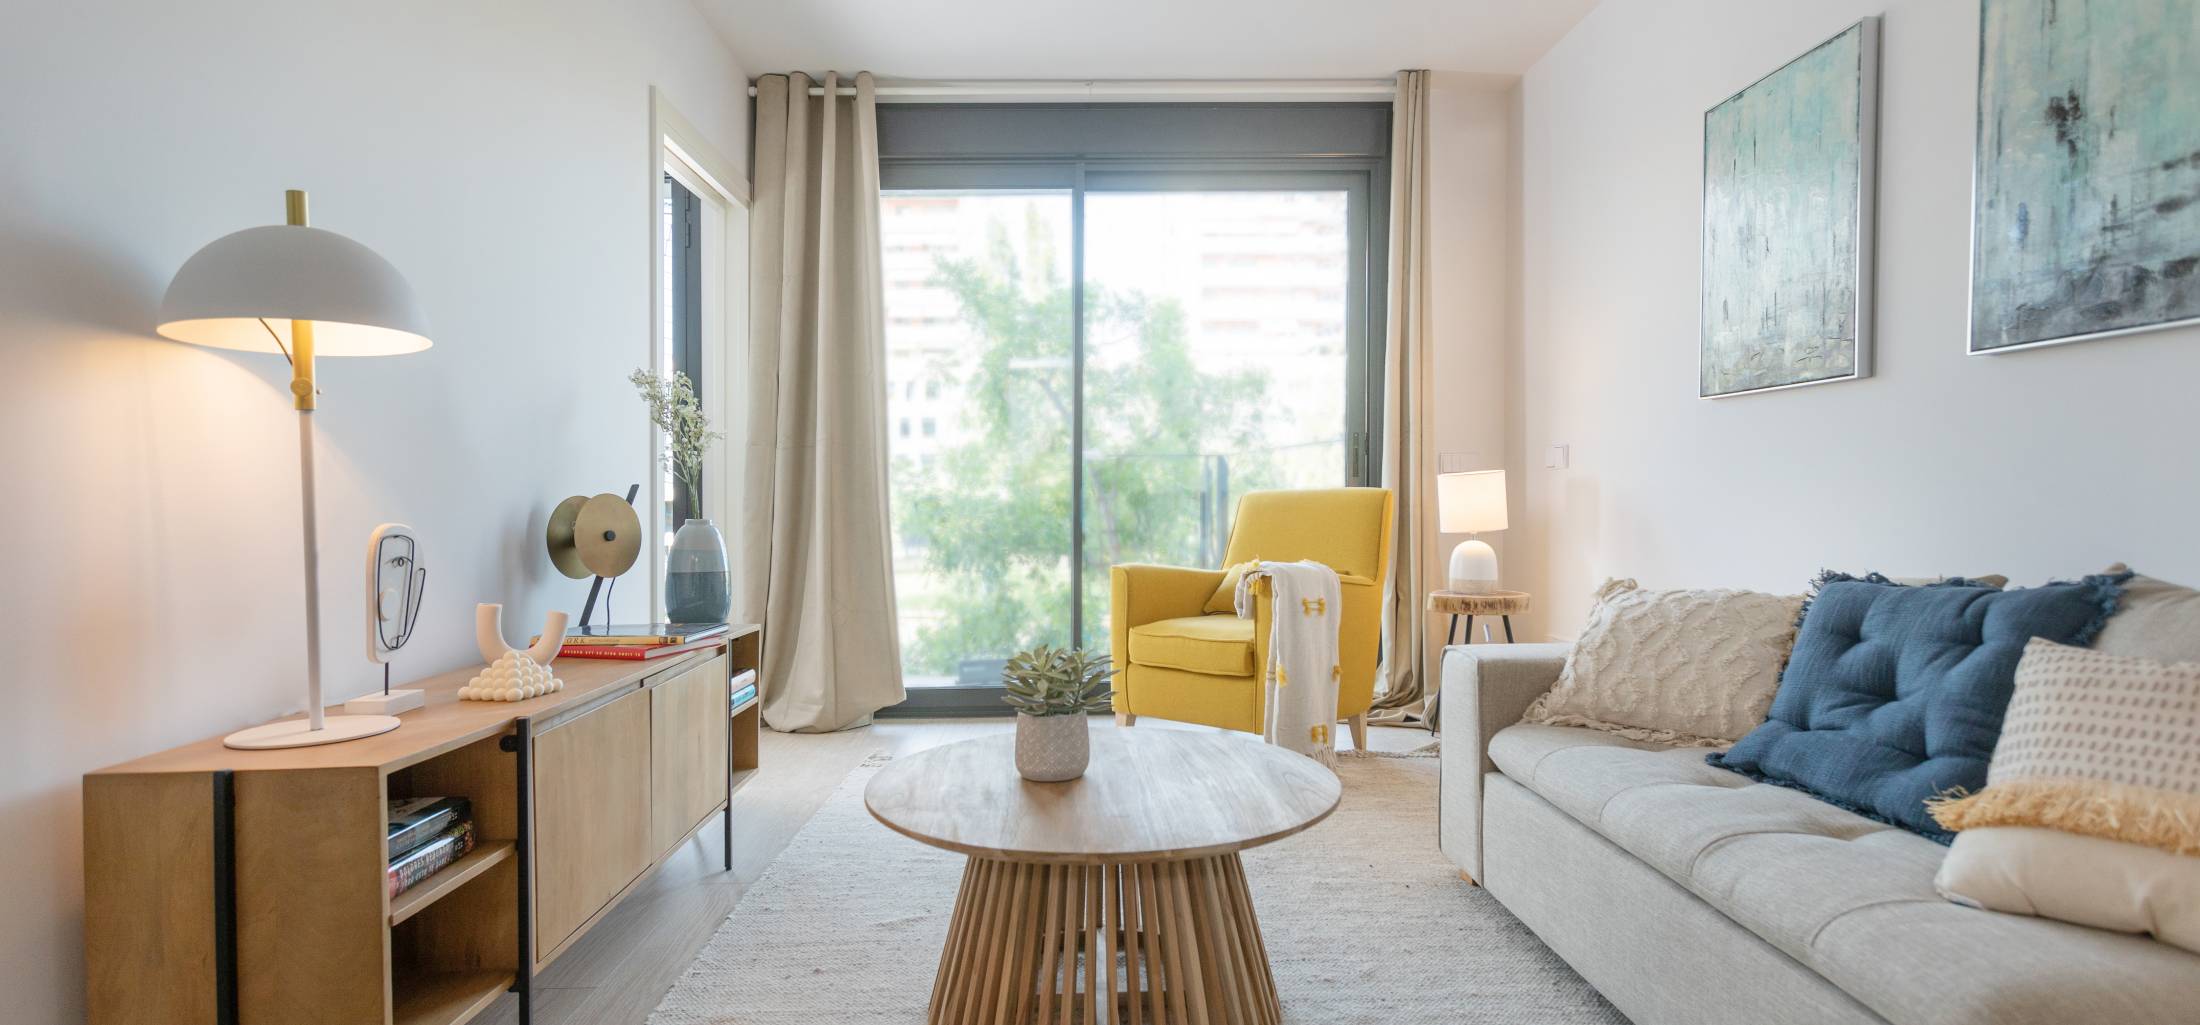 Living room of apartment for rent in Marobert | Badalona 